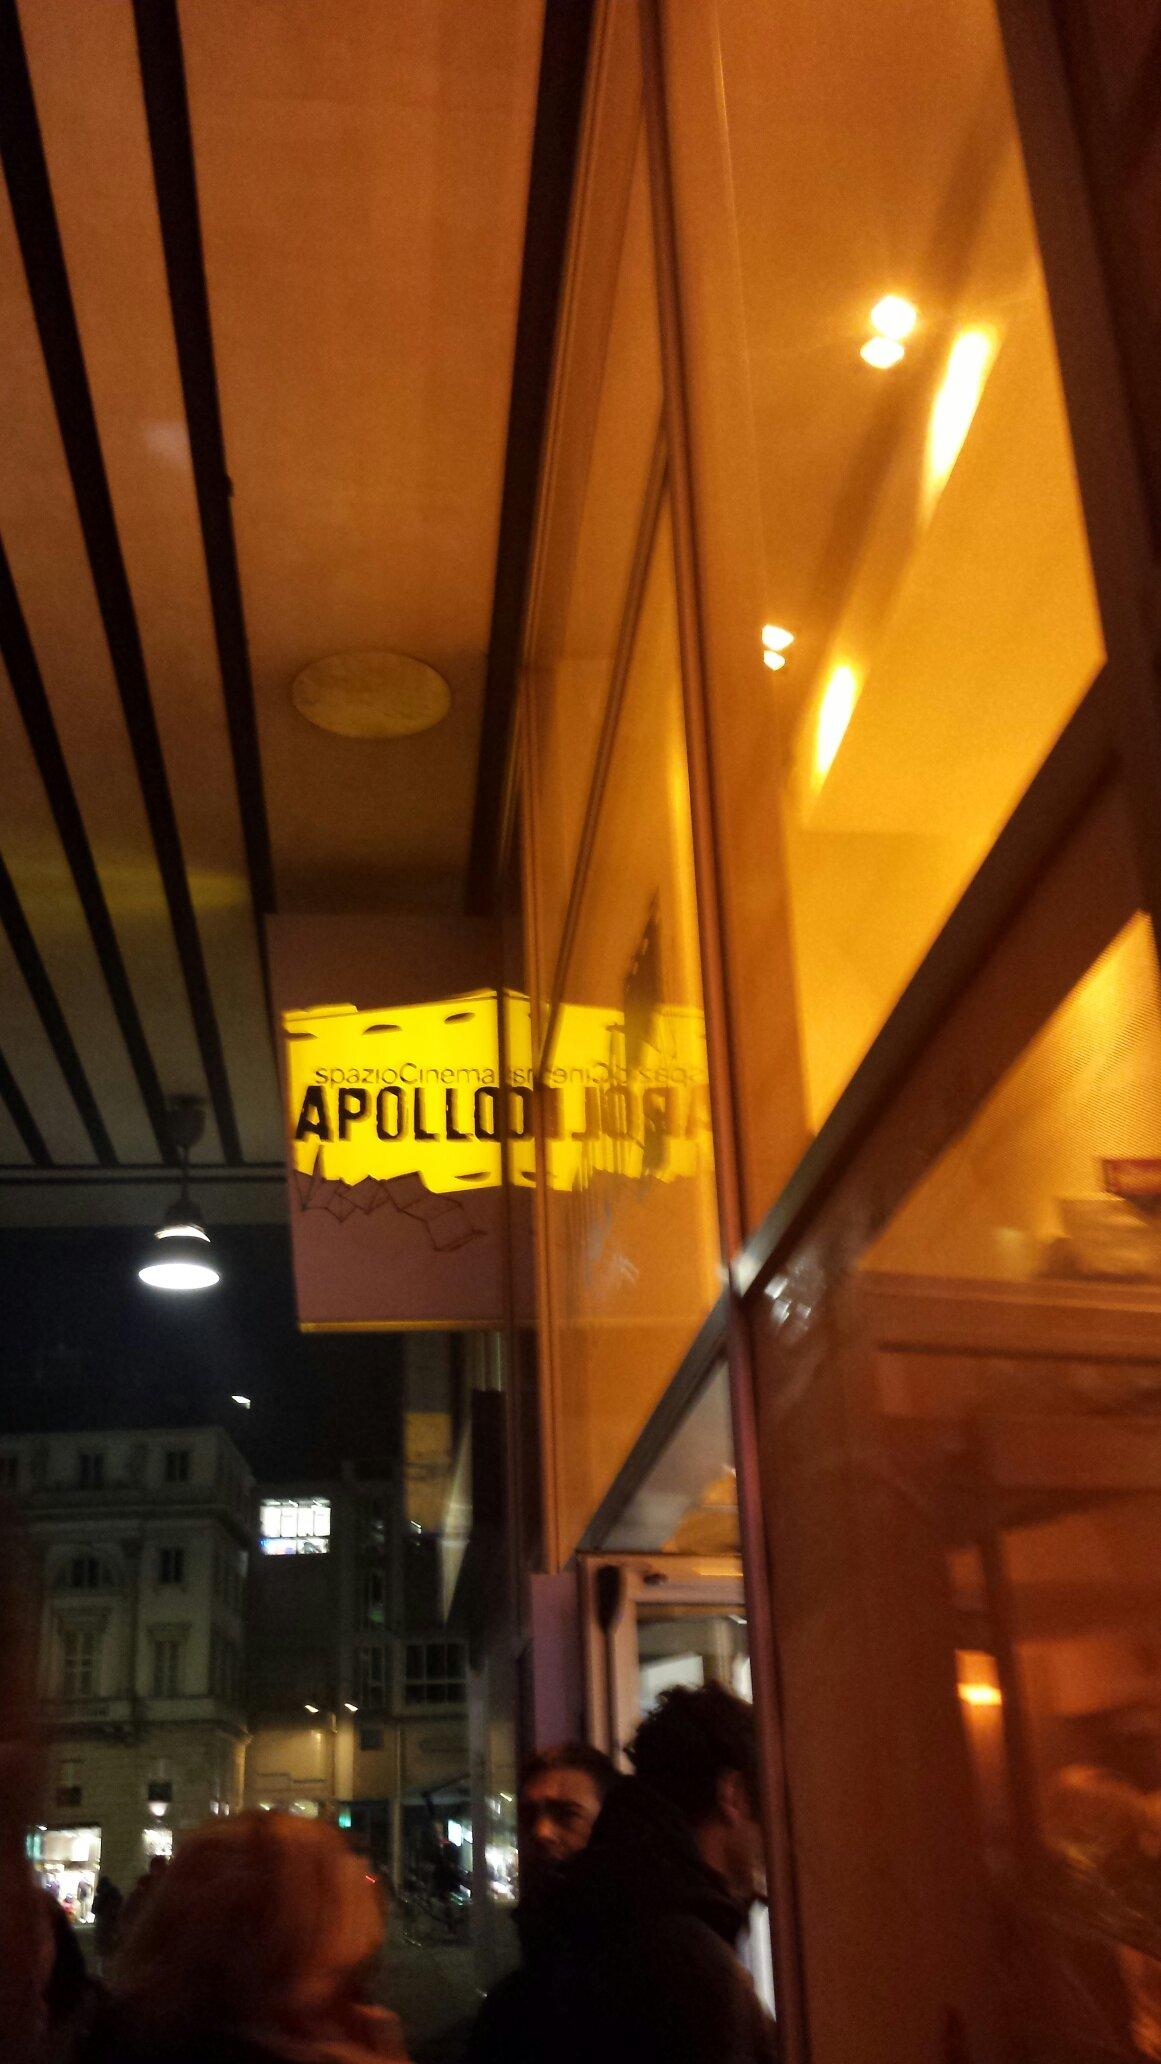 Apollo Cinema